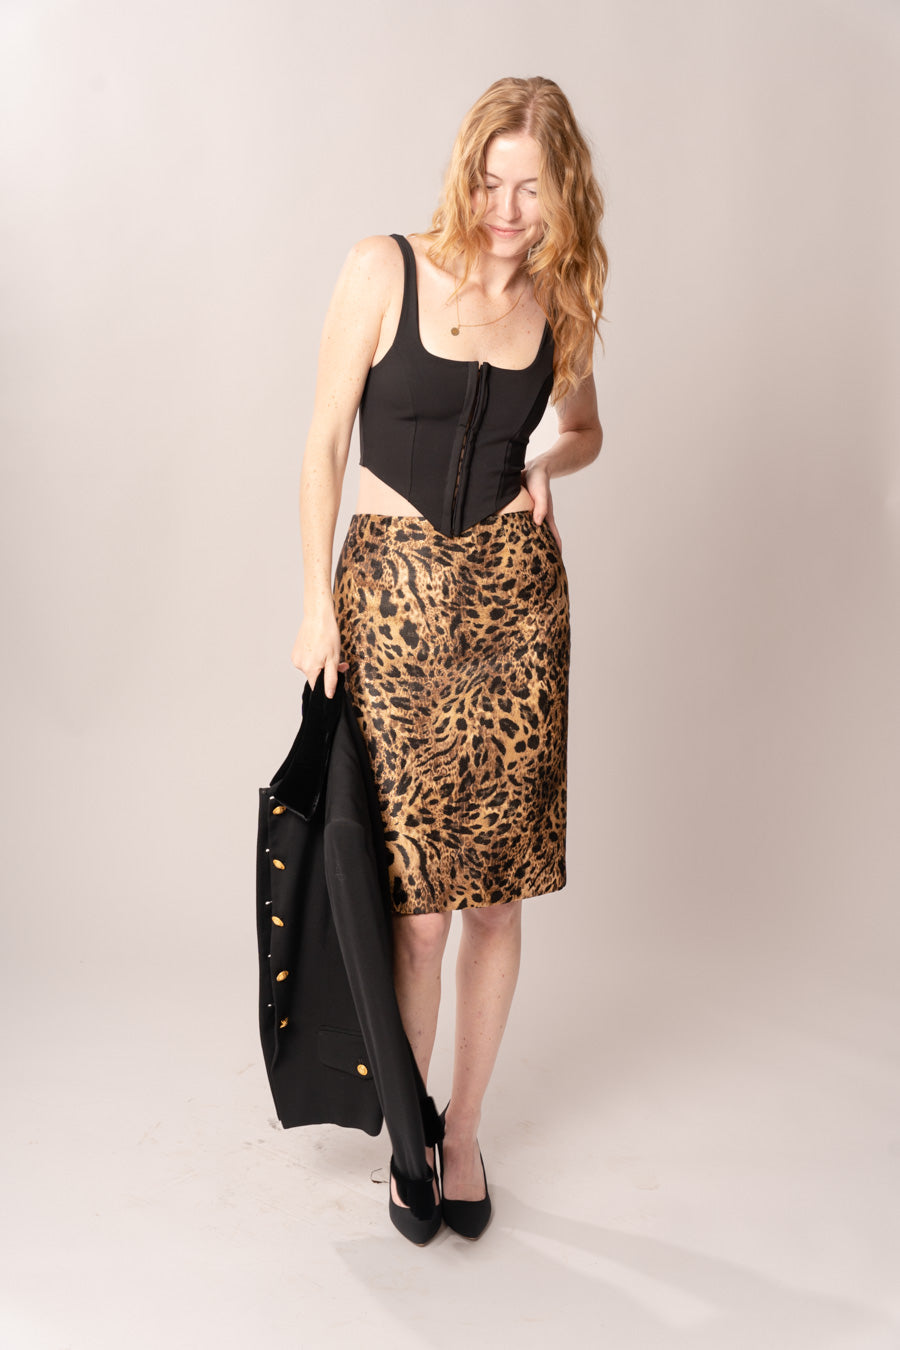 1990’s Metallic Leopard Skirt